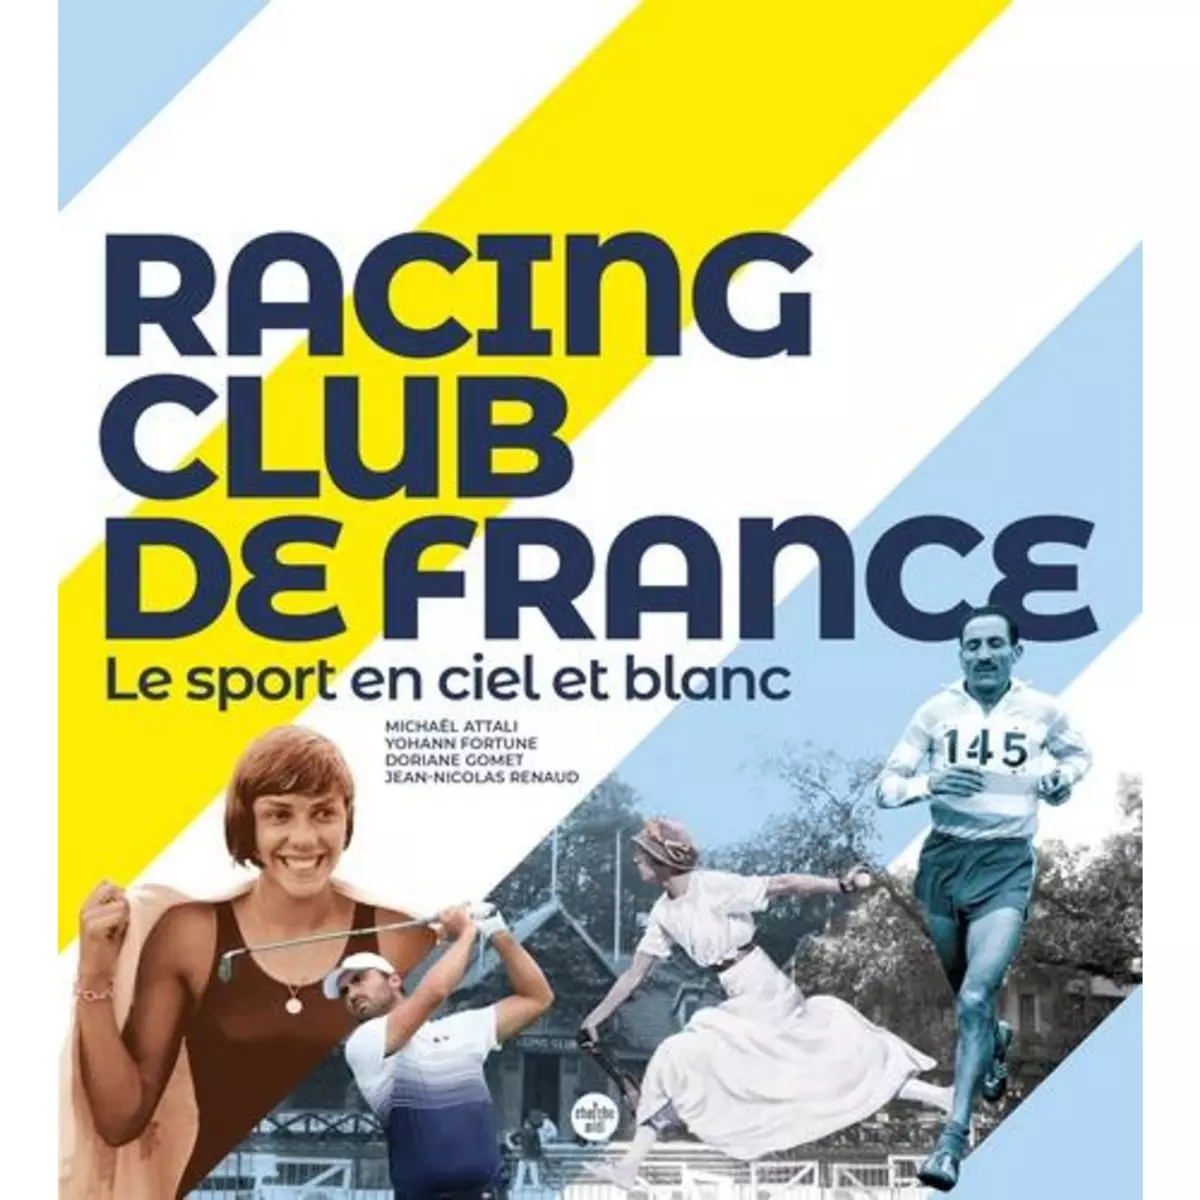  RACING CLUB DE FRANCE. LE SPORT EN CIEL ET BLANC, Attali Michaël